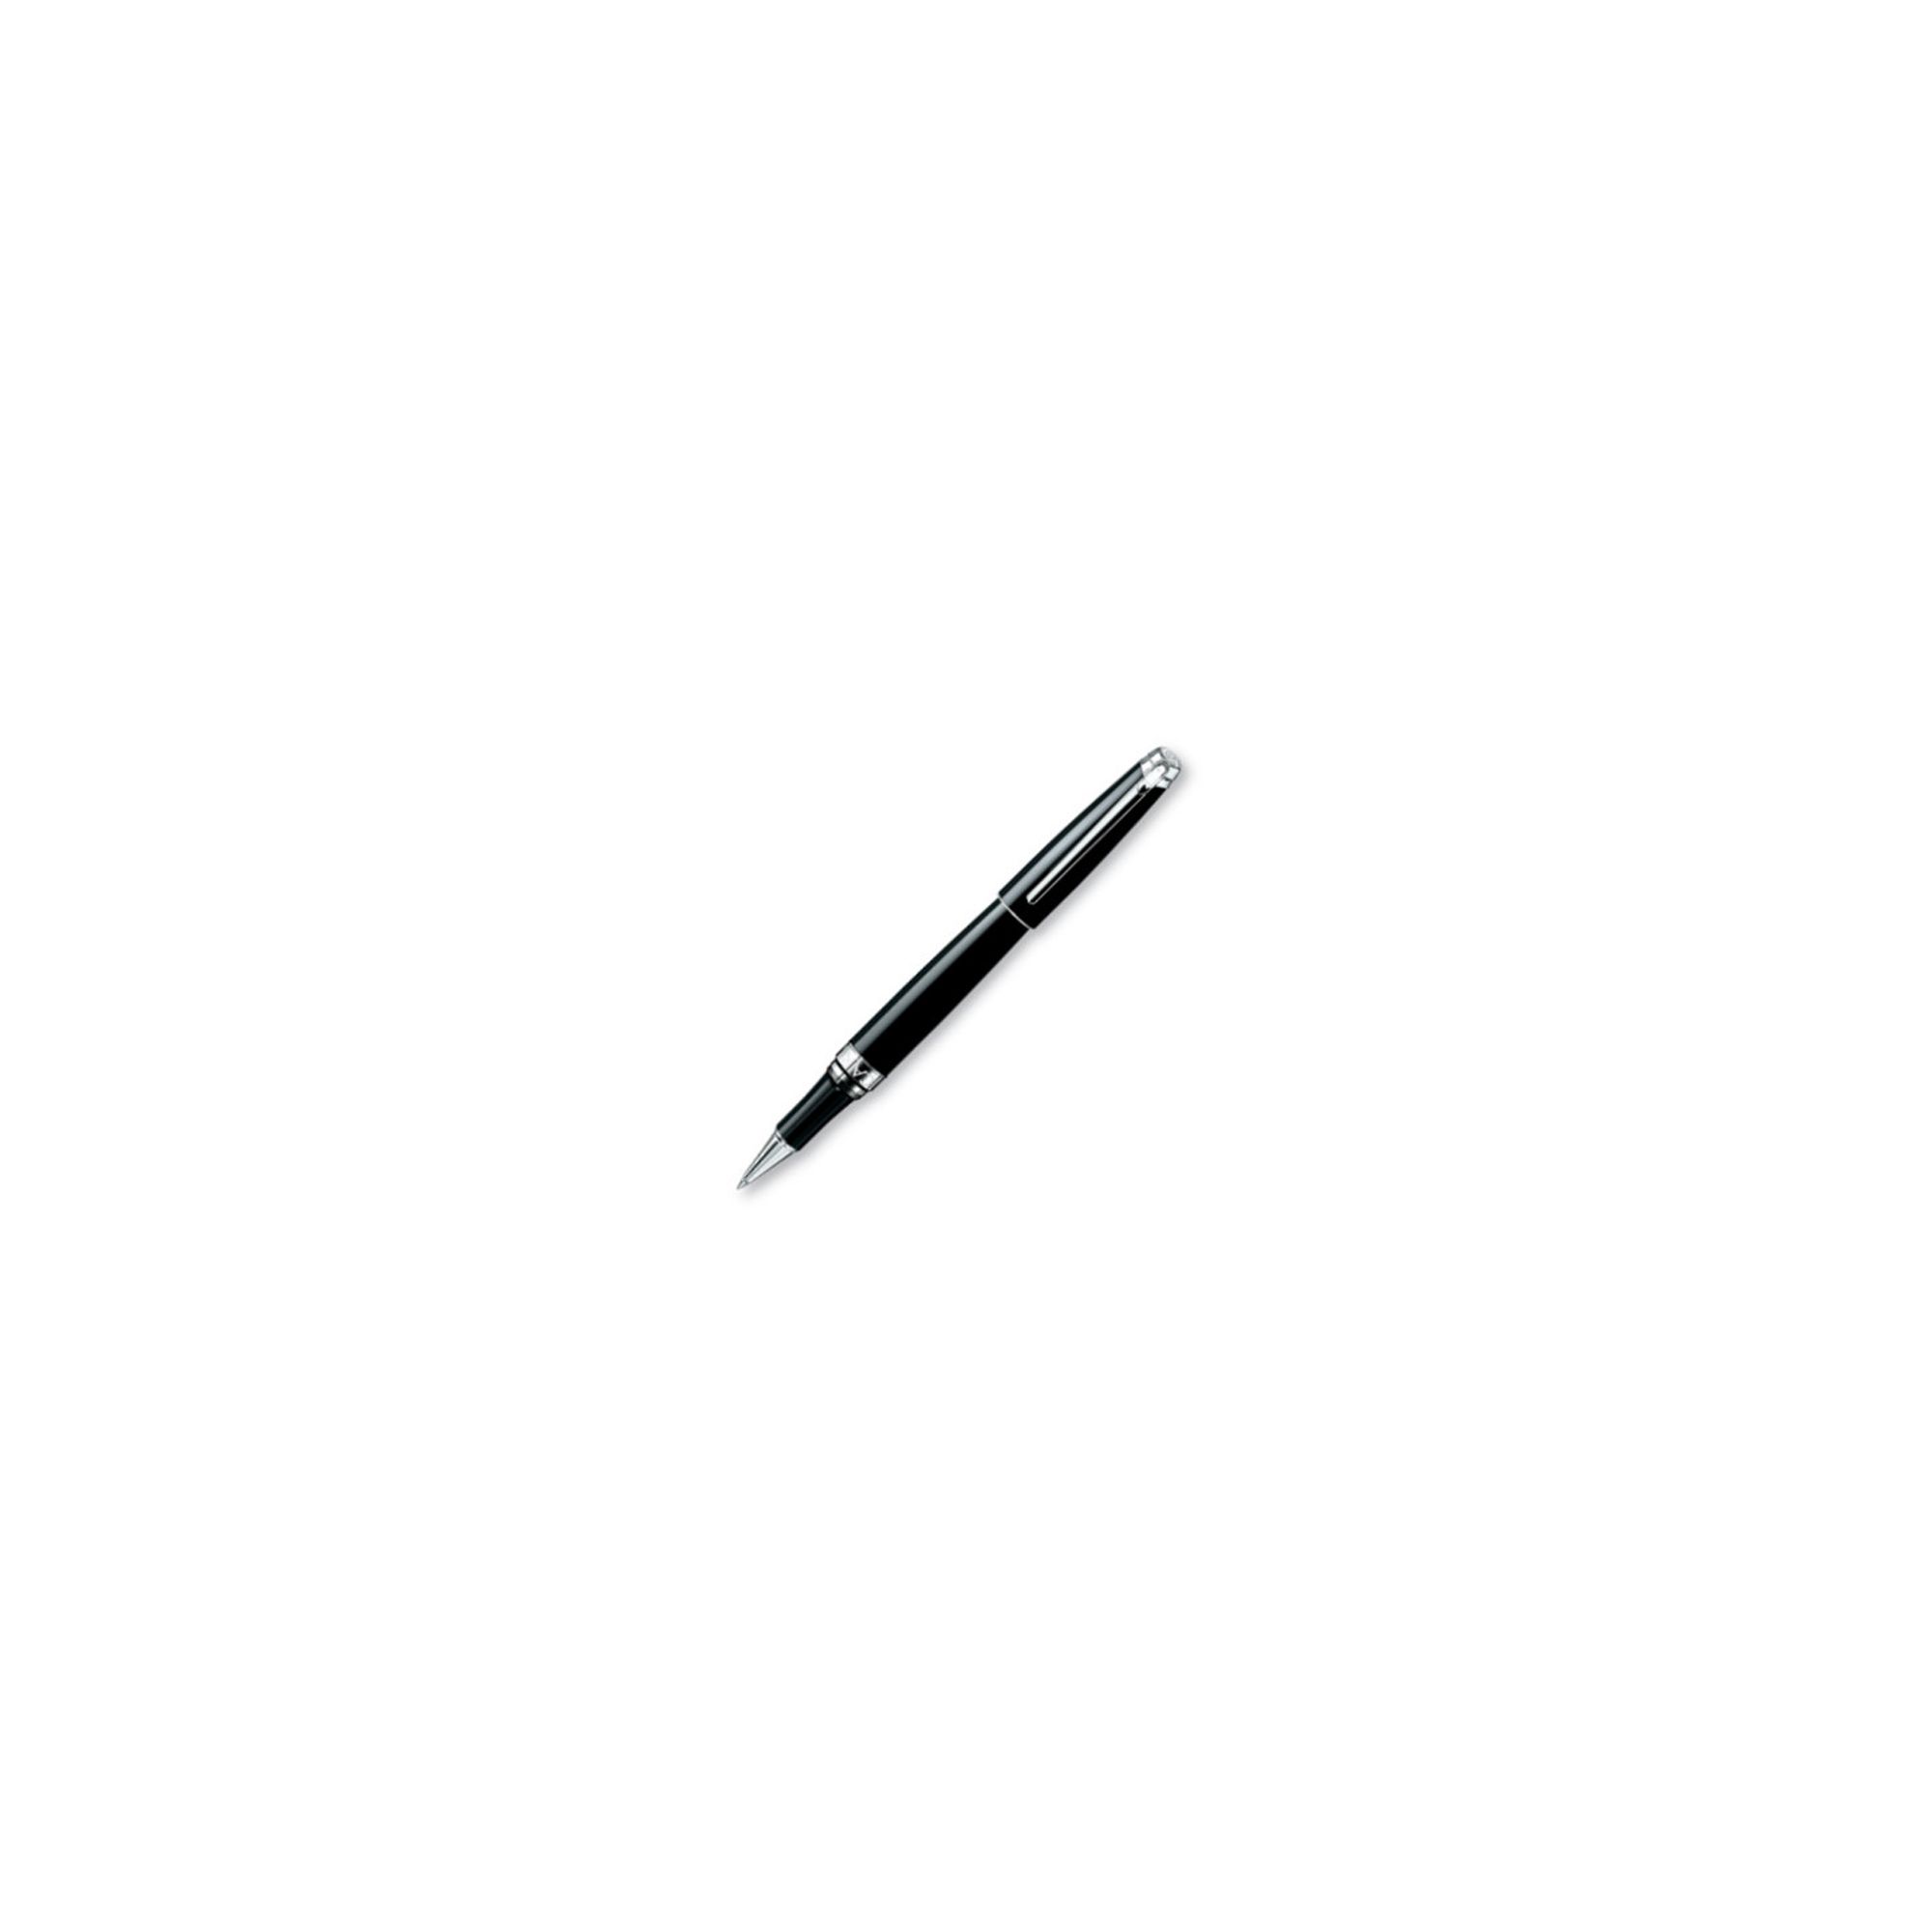 Caran d'Ache Leman Black Lacquer and Rhodium Plated Roller ball Pen at Tesco Direct